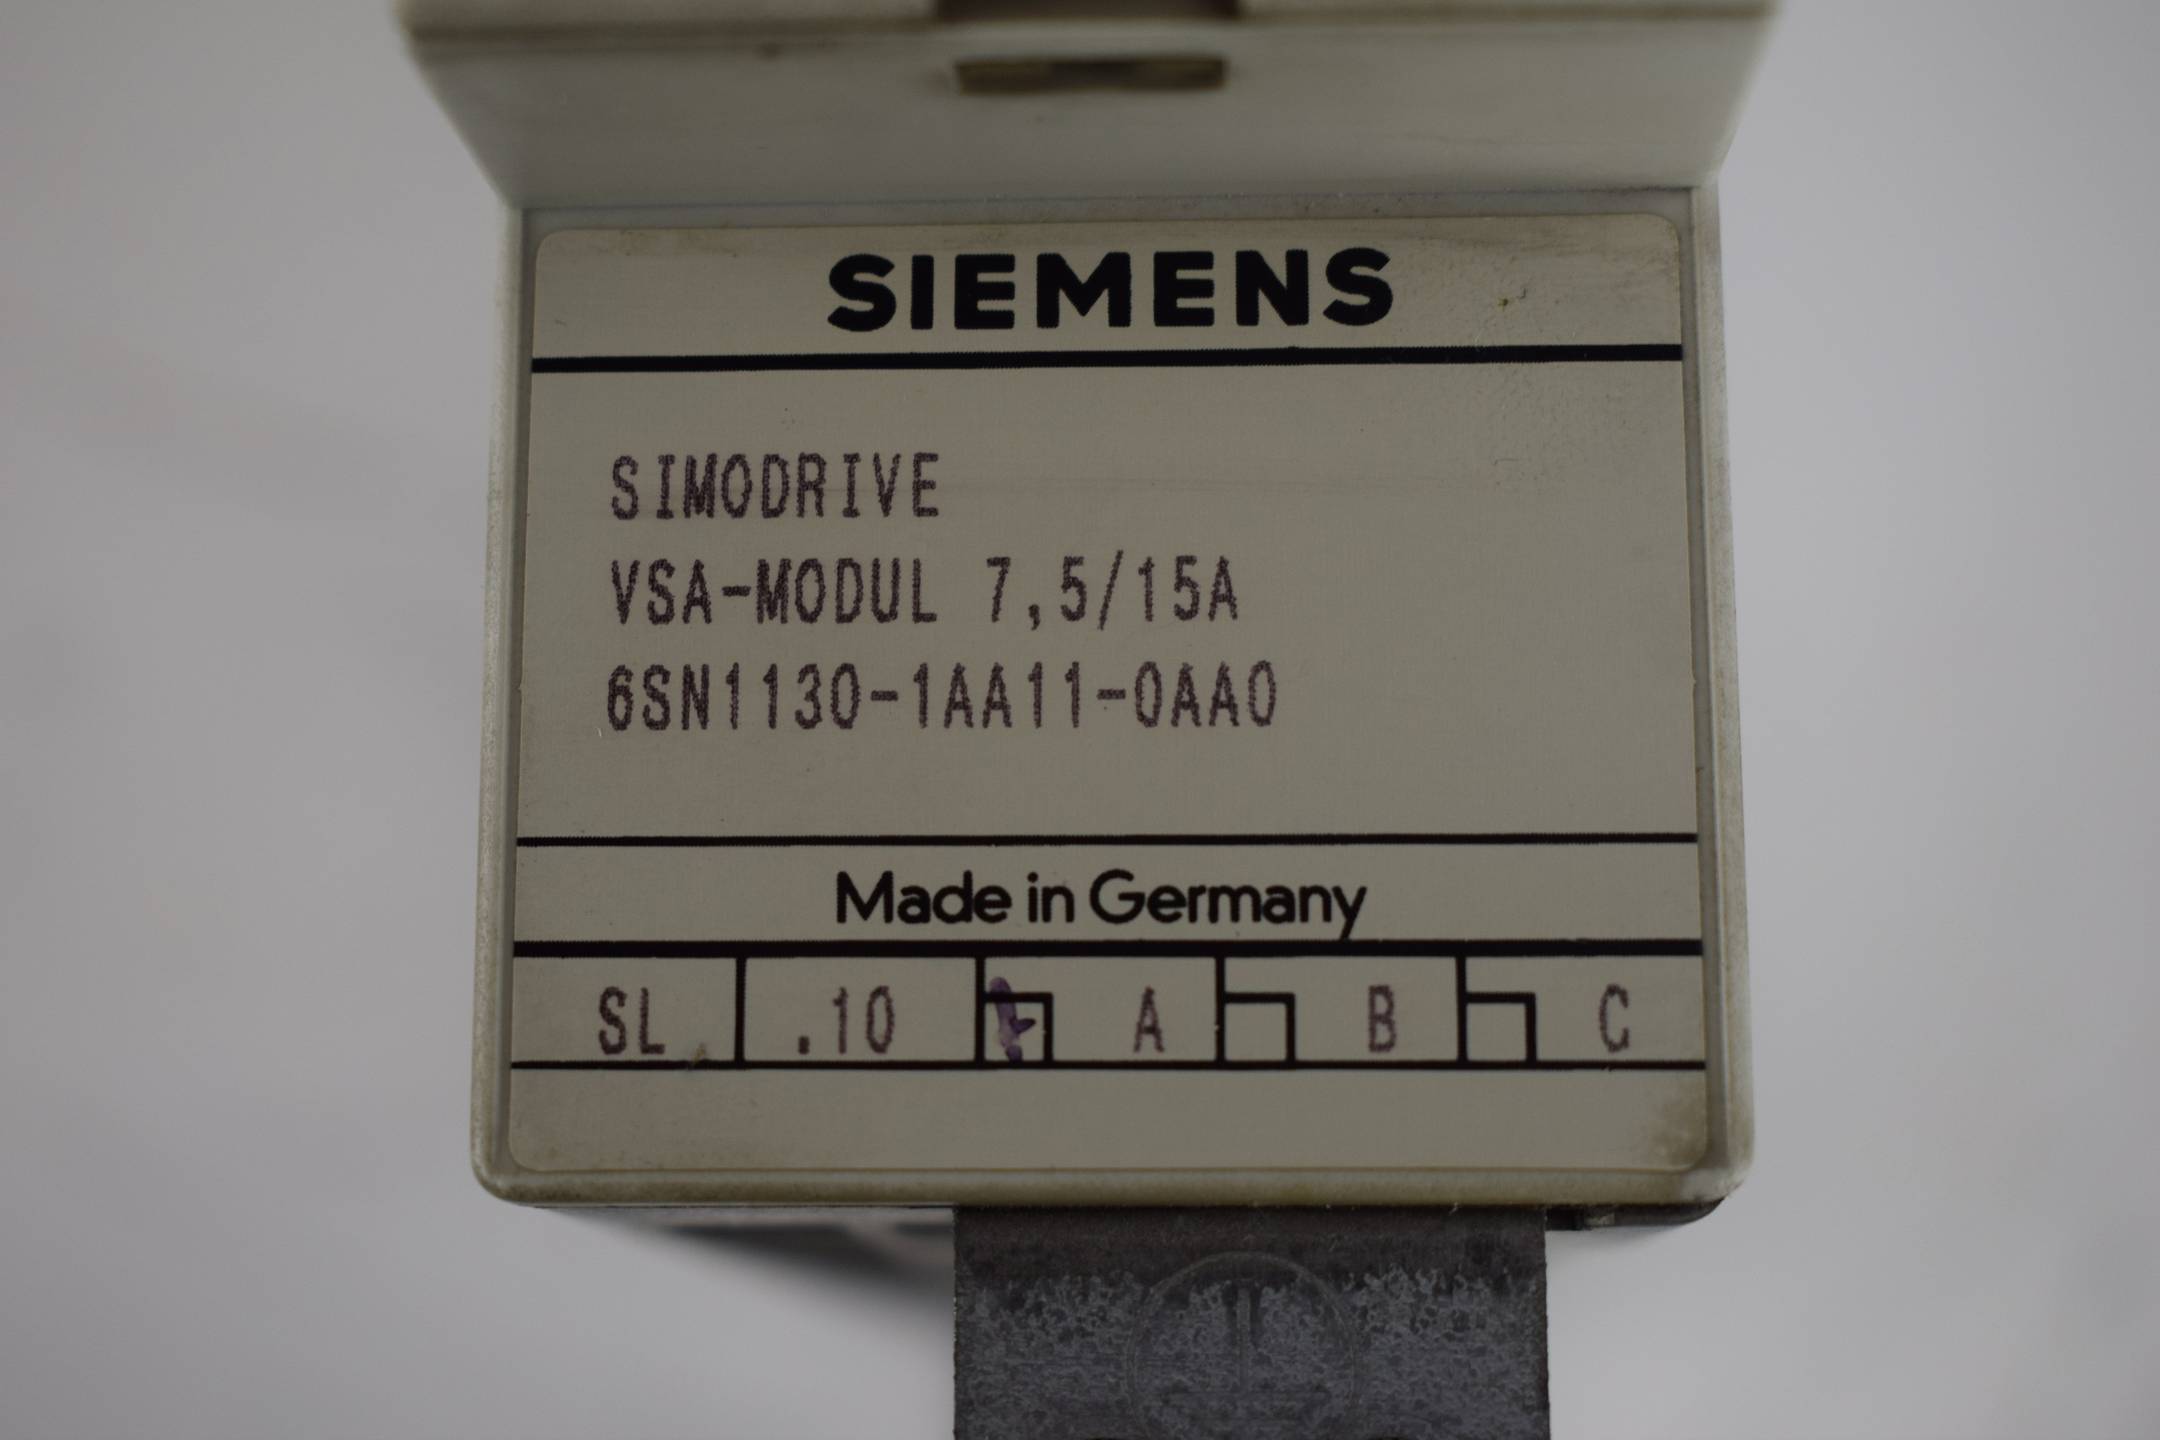 Siemens simodrive 6SN1130-1AA11-0AA0 Rev. A